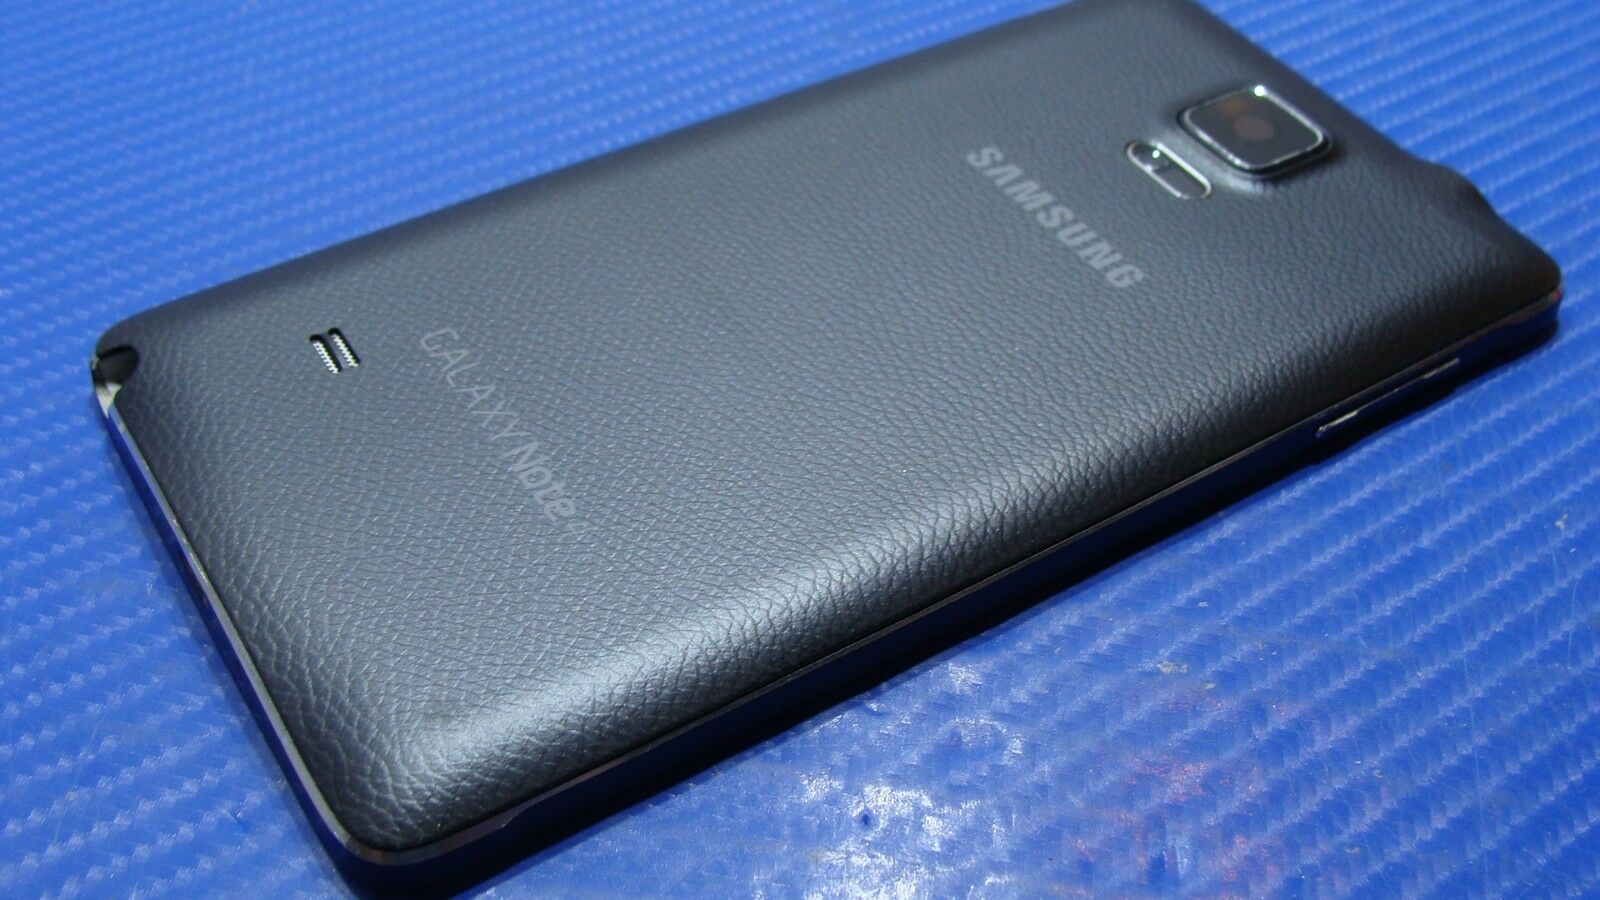 Samsung Galaxy Note 4 5.7